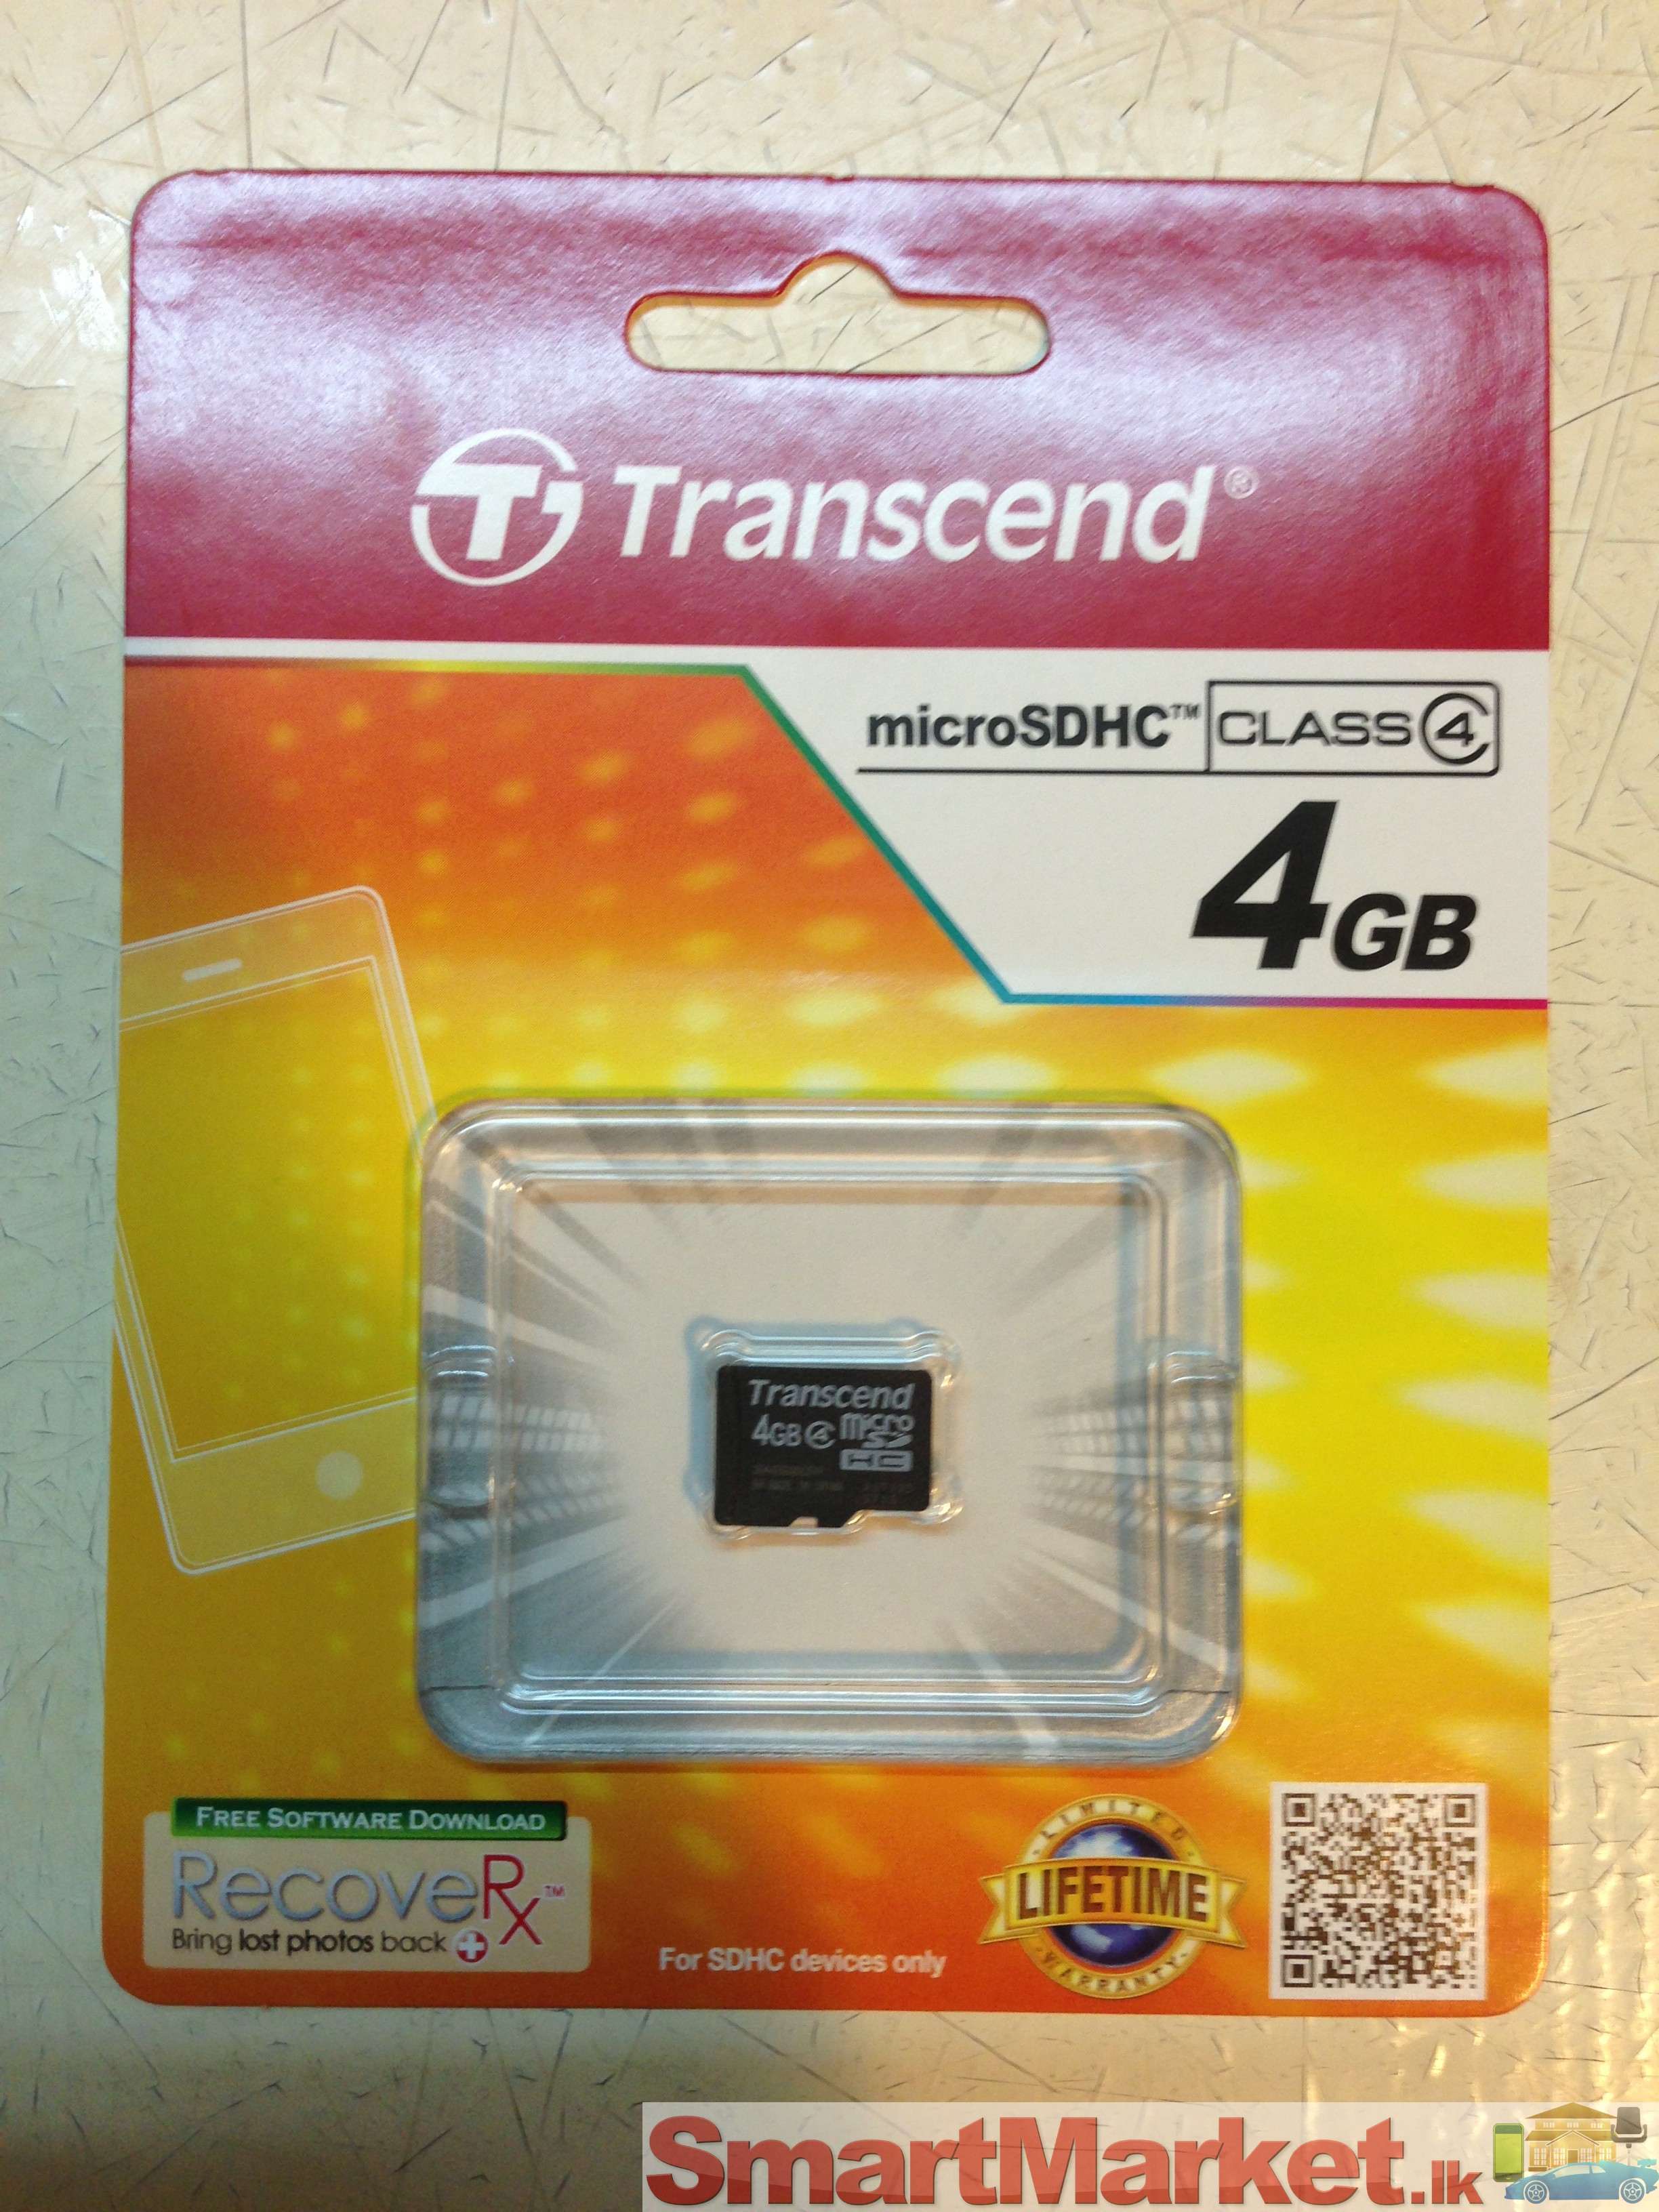 Transcend memory card for sale